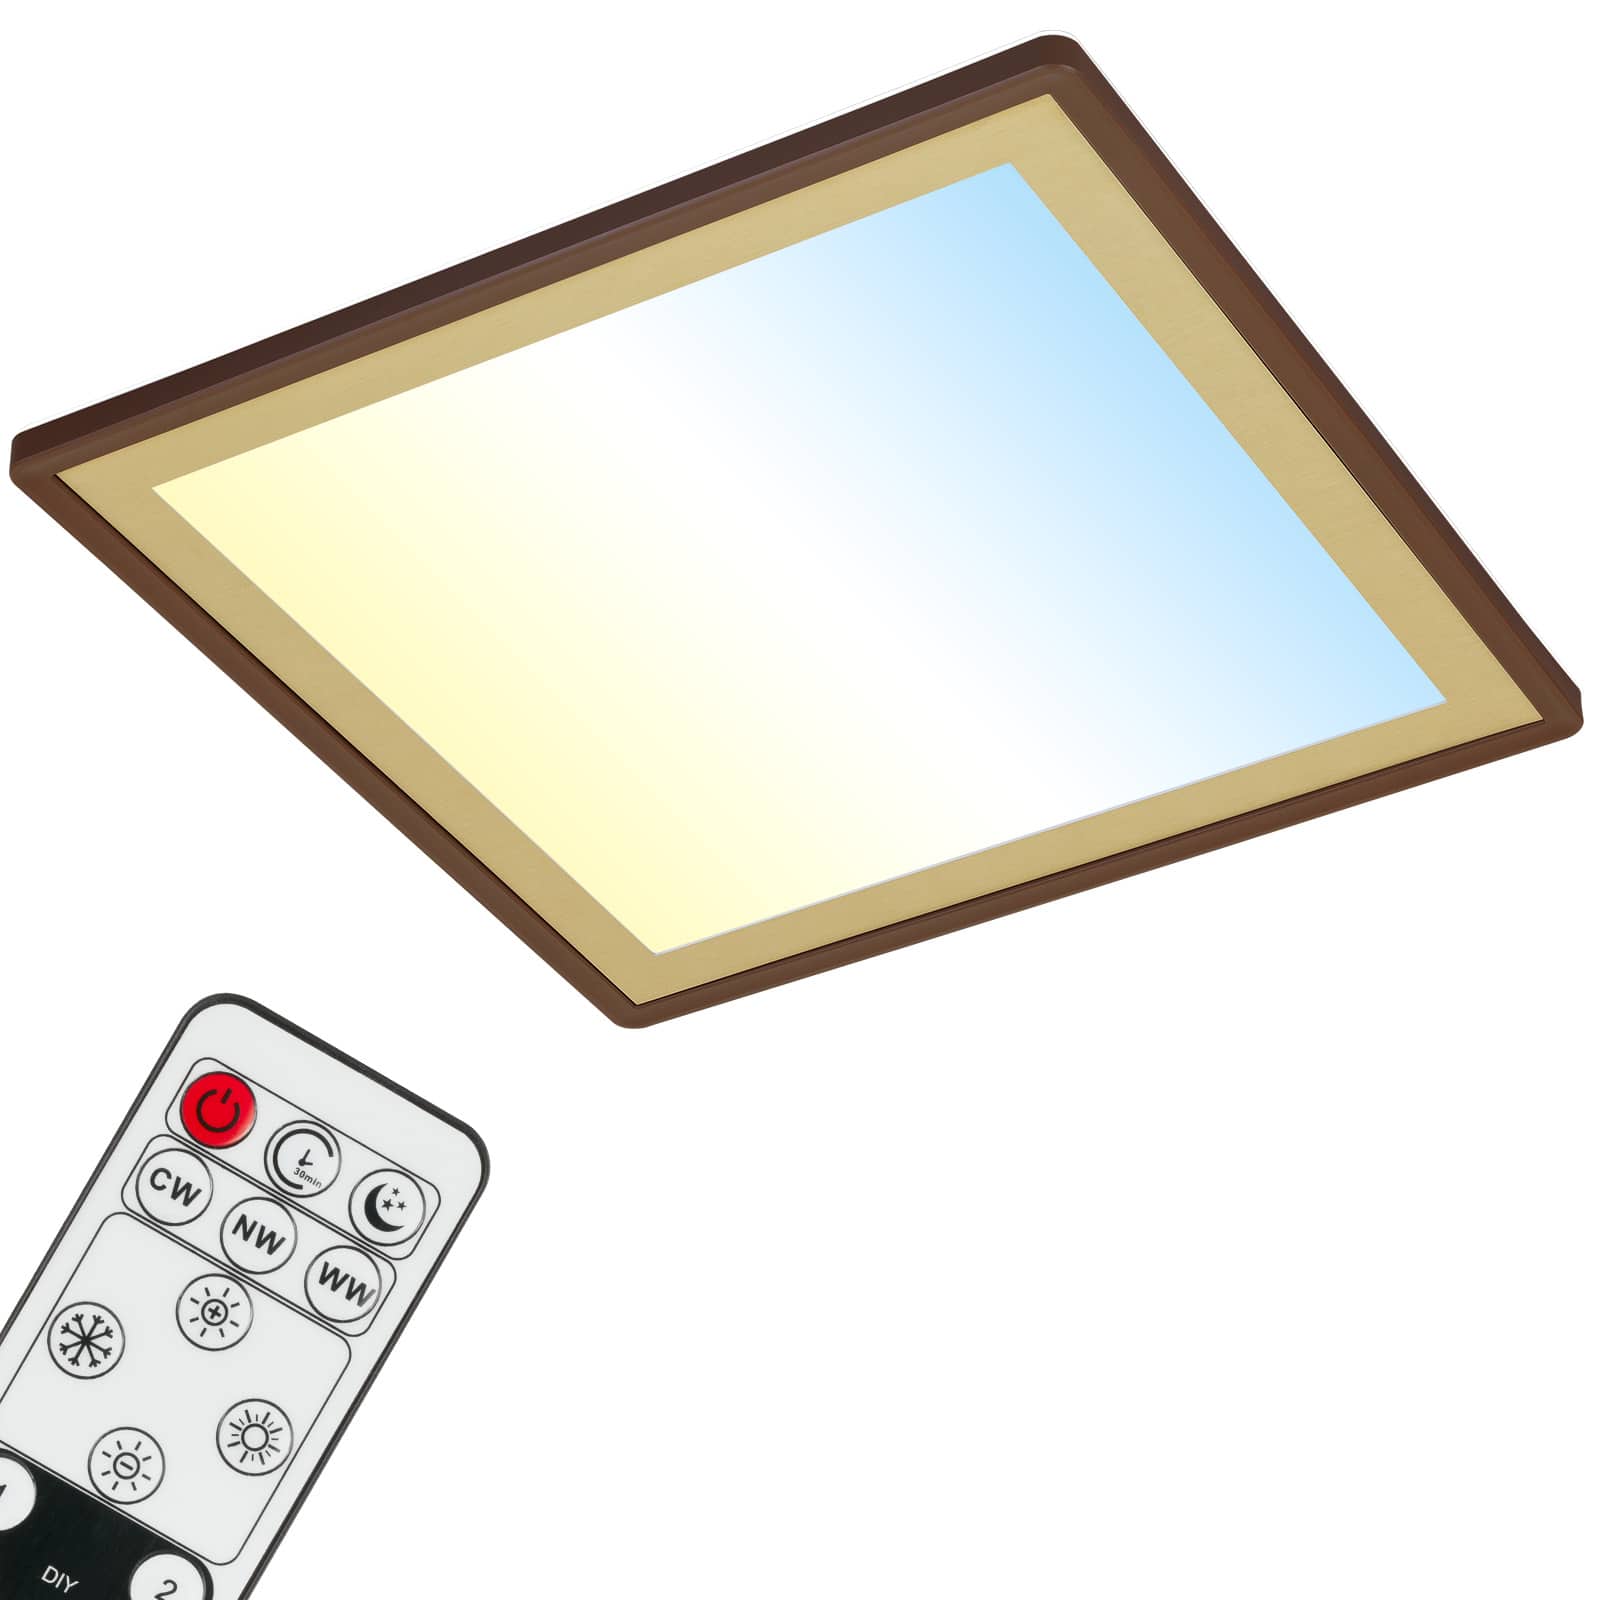 Ultraflaches CCT-LED Panel mit LED Backlight, 10 cm, LED, 22 W, 3000 lm, braun-gold